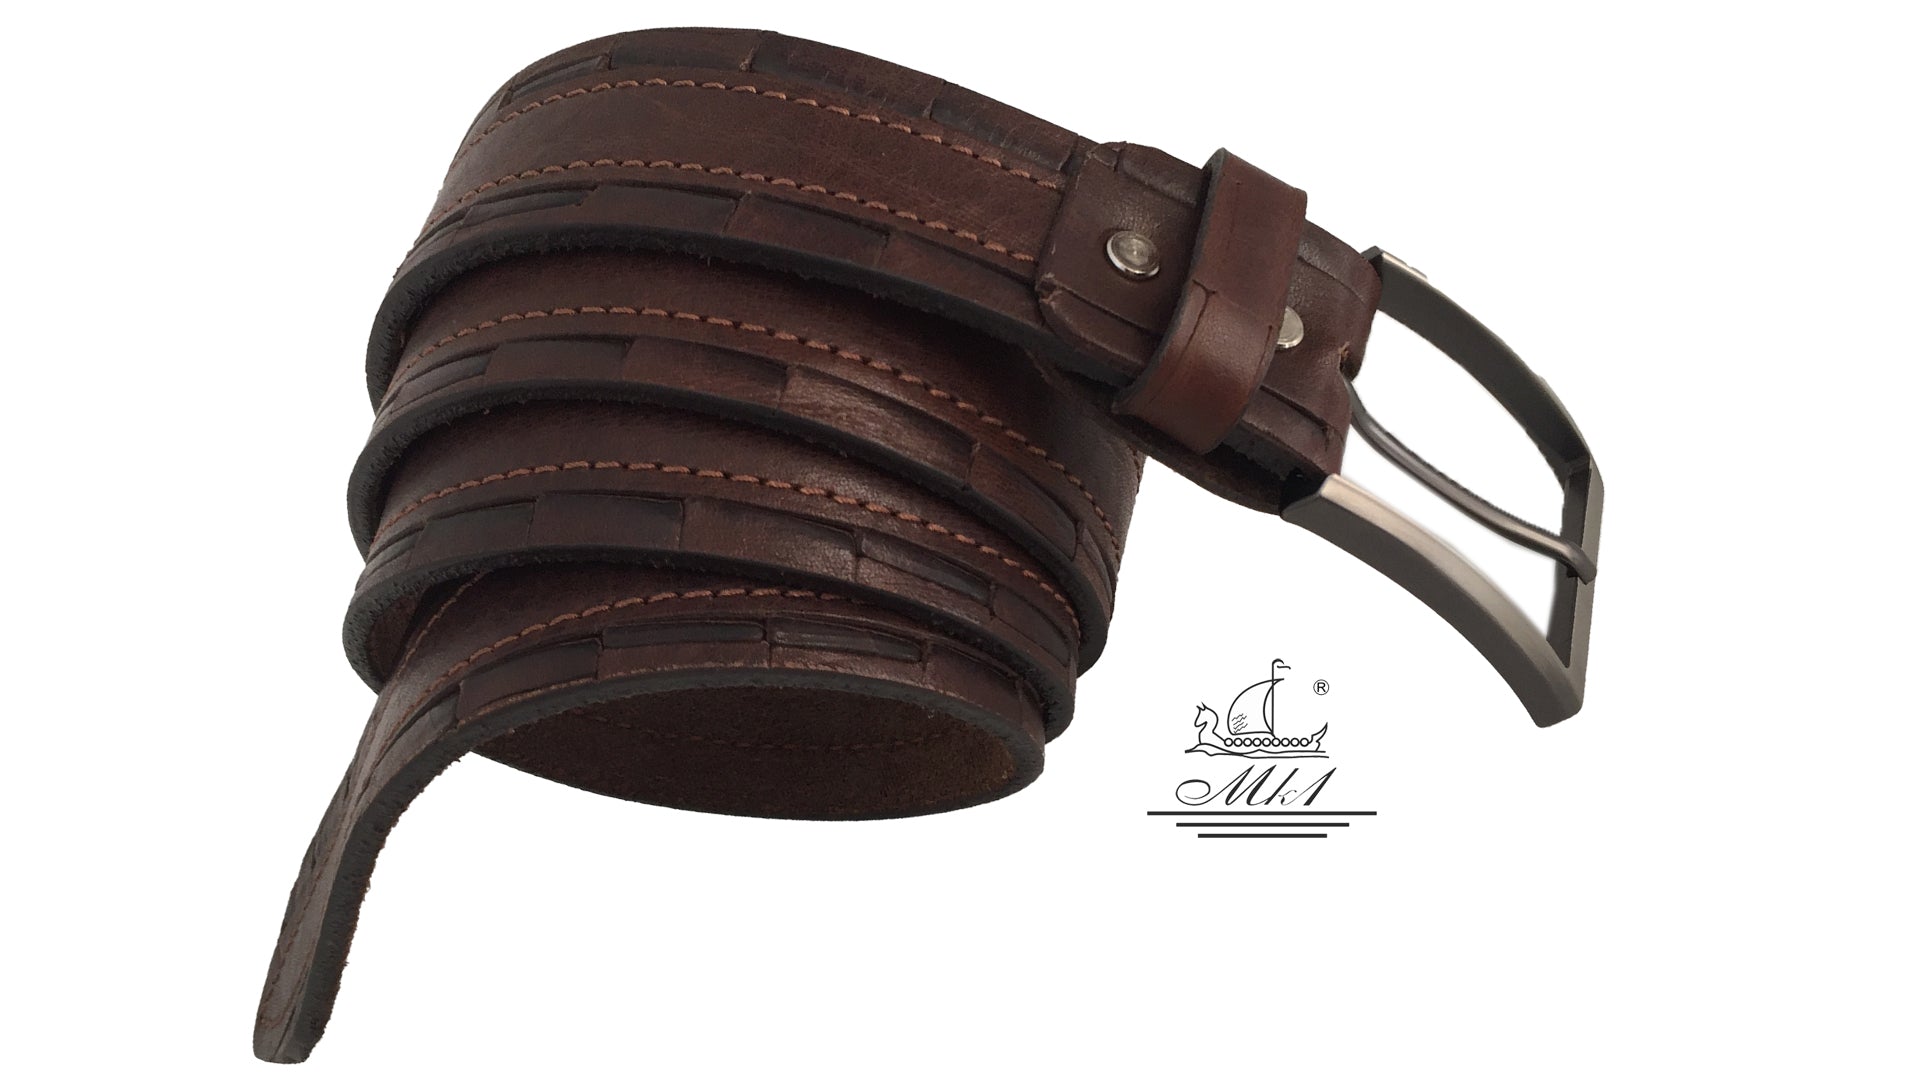 Z2752/40k-krp-g Hand made leather belt